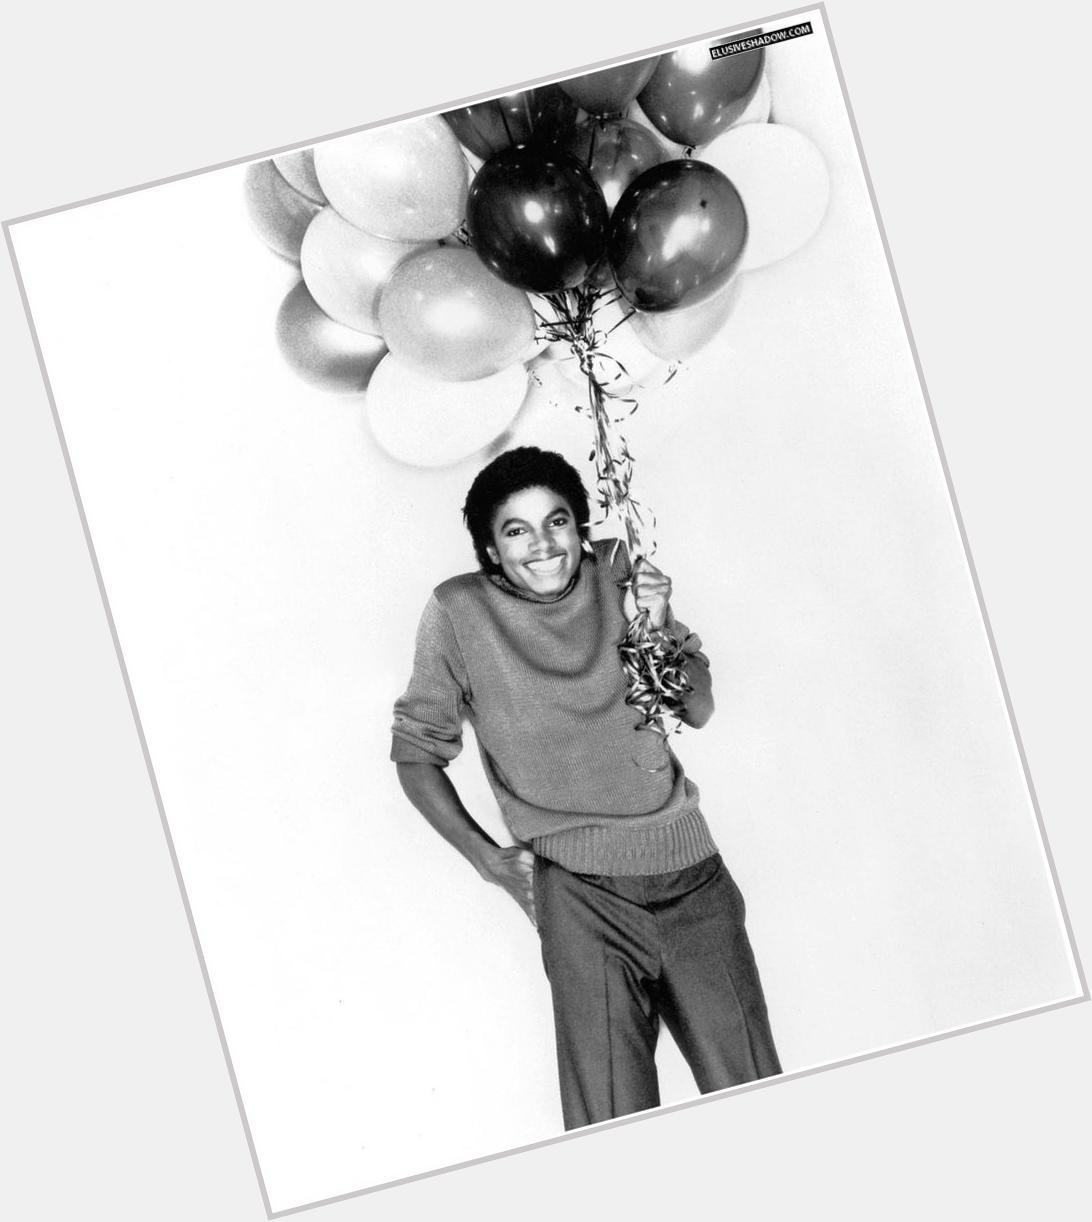 RIP Michael Jackson, happy birthday 